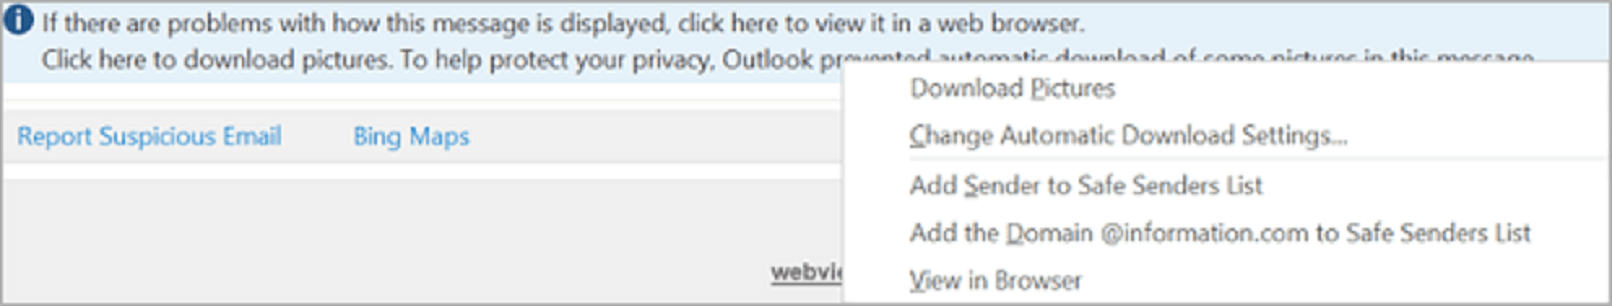 Outlook ไม่สามารถดาวน์โหลดภาพได้